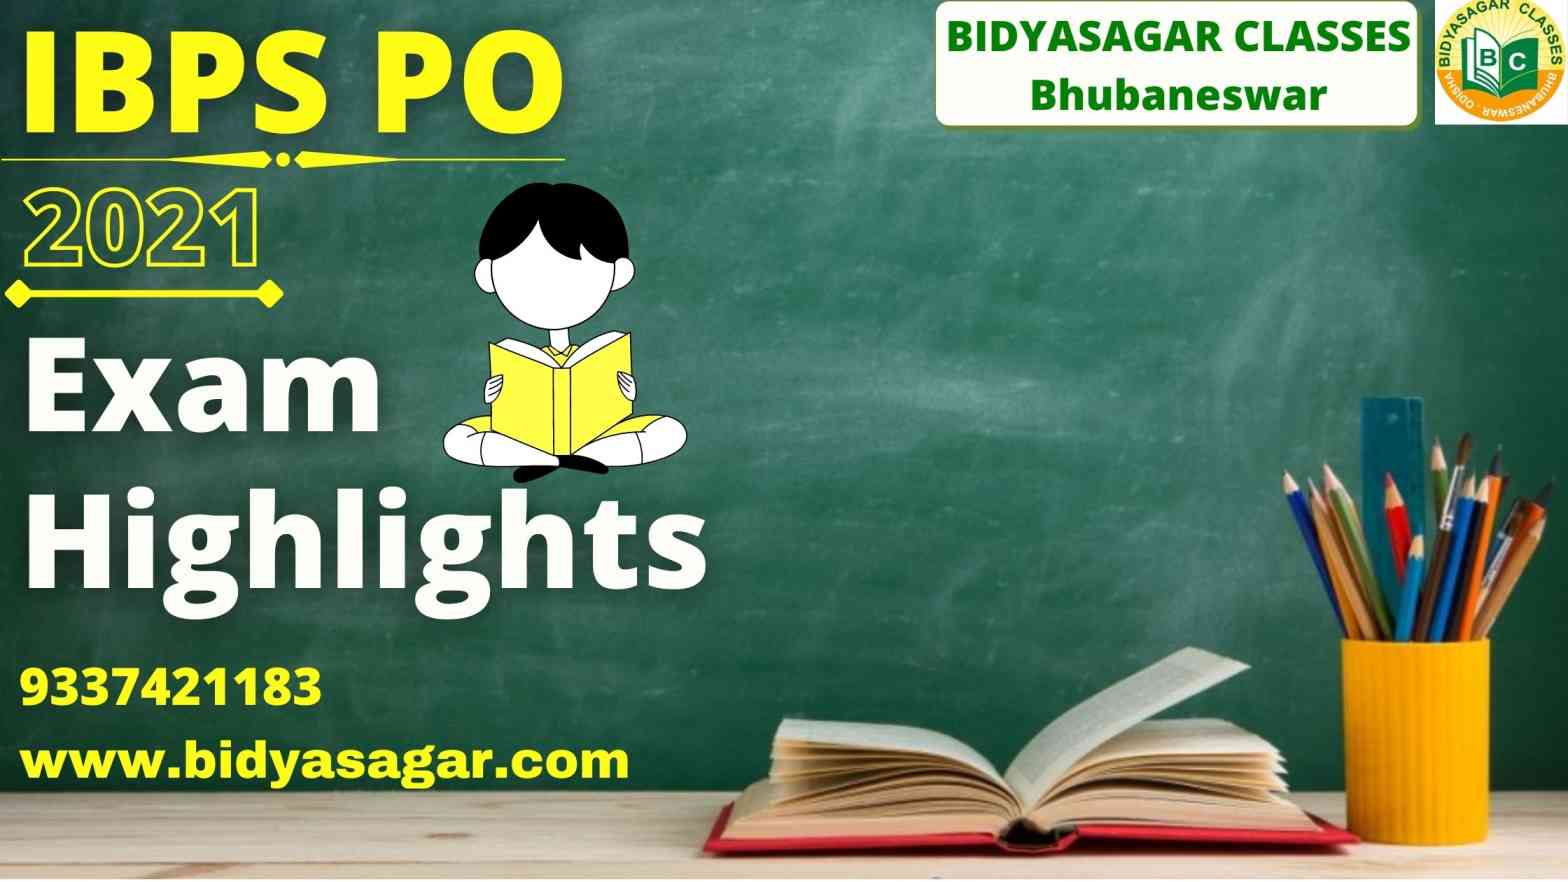 IBPS PO Exam 2021 Exam Highlights